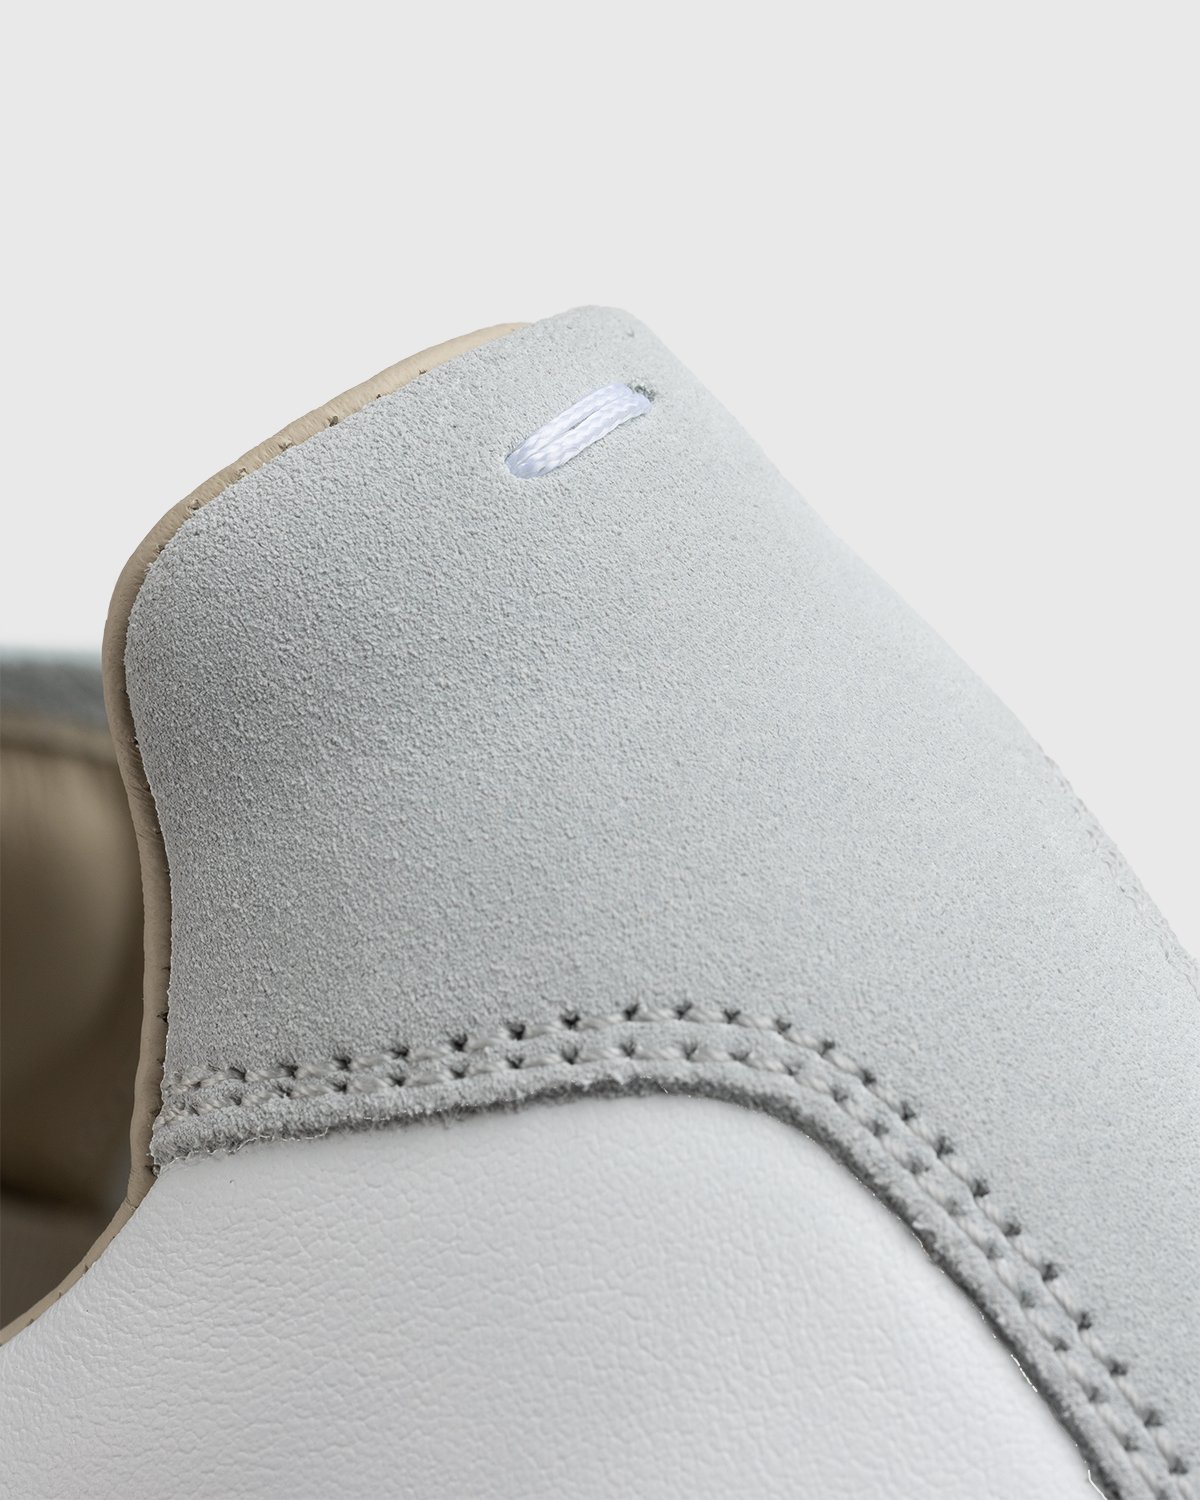 Maison Margiela - Replica Paint Drop Sneakers White - Footwear - White - Image 5